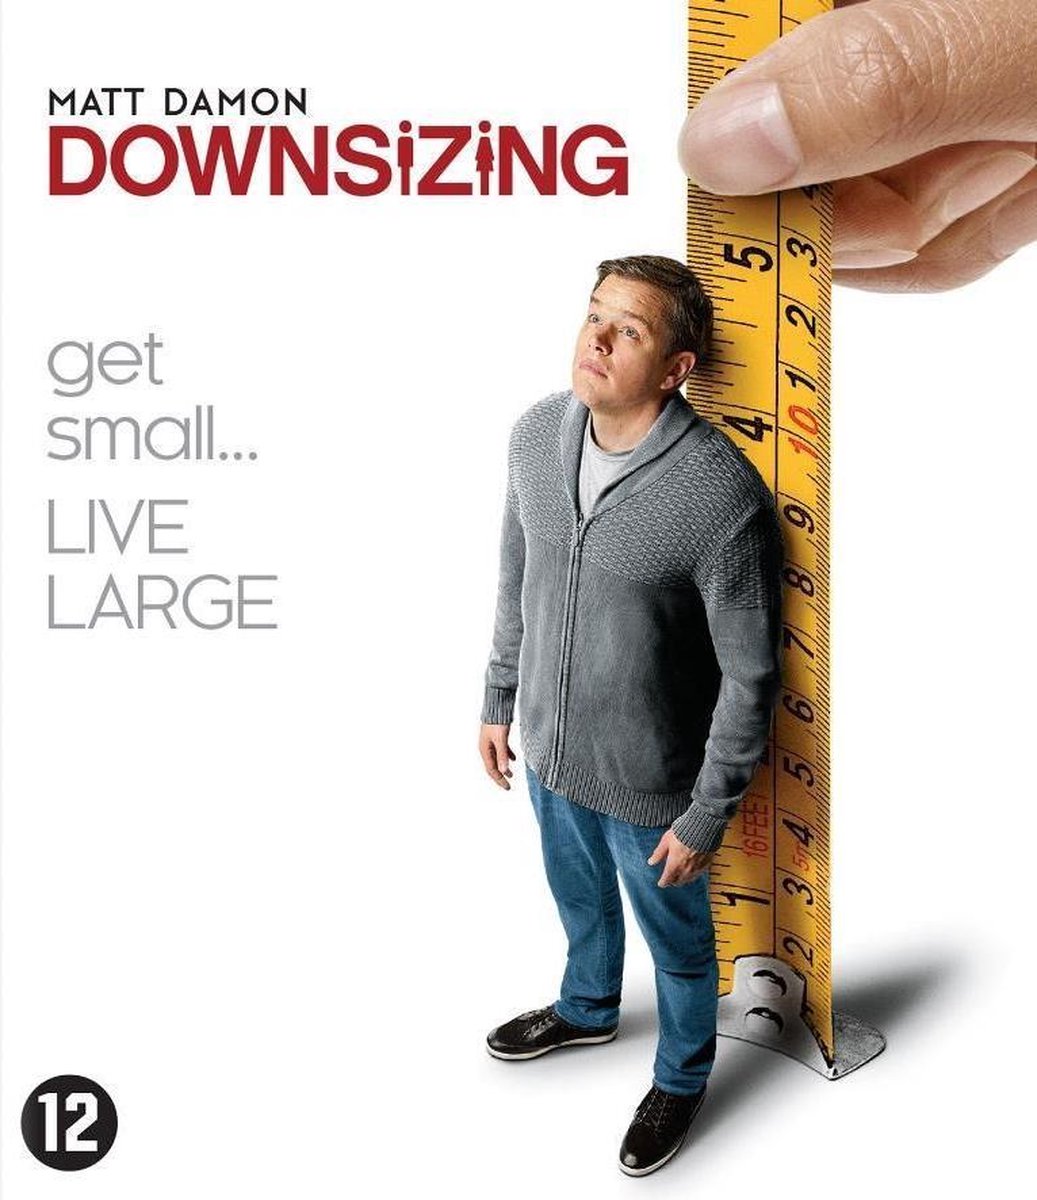 Downsizing (Blu-ray) - Dutch Film Works